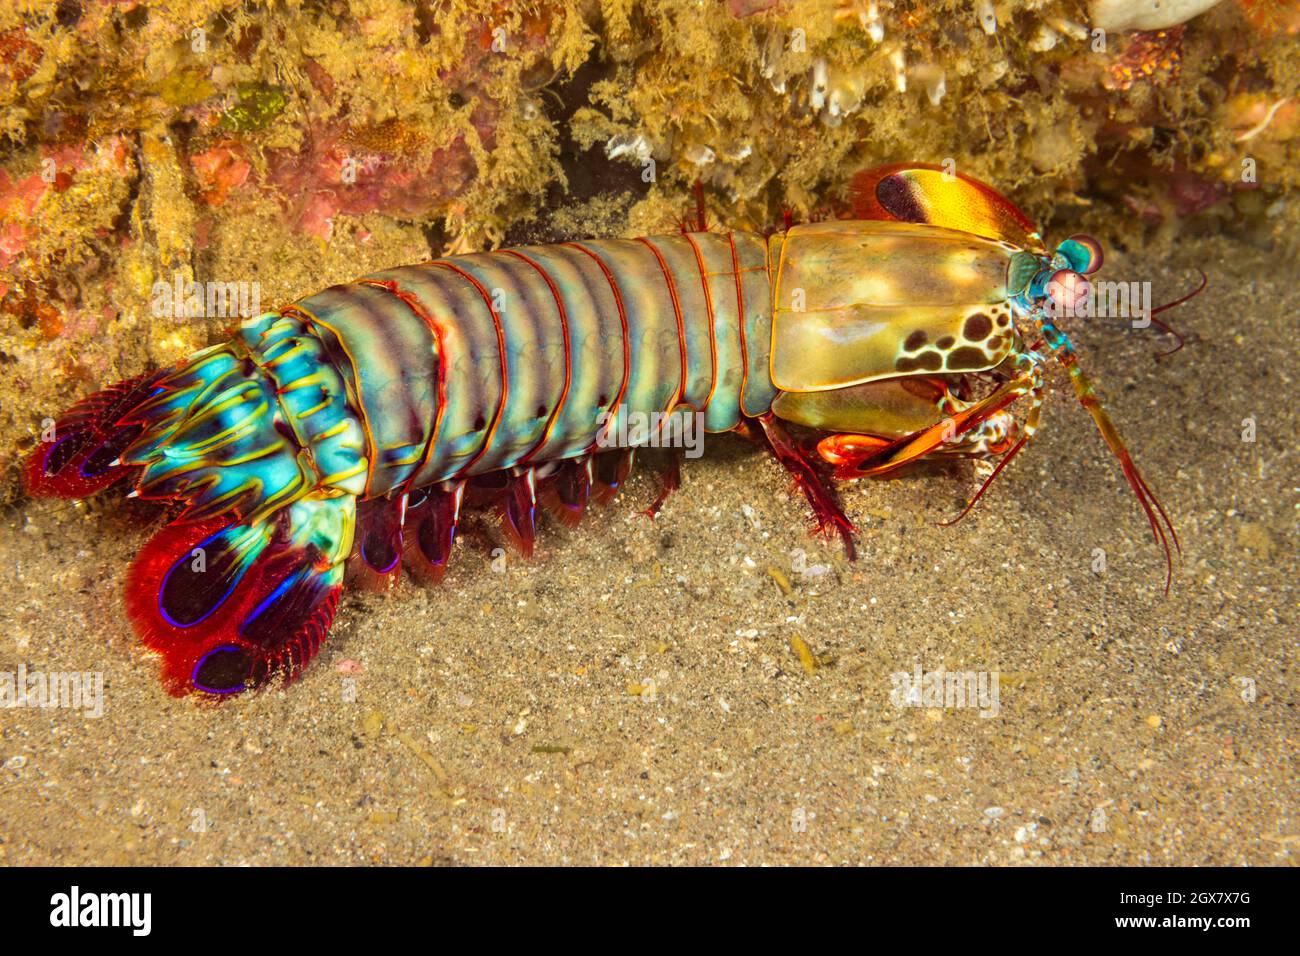 The mantis shrimp, Odontodactylus scyllarus, is also known as a clown mantis shrimp and peacock mantis shrimp, Cebu, Philippines. Stock Photo